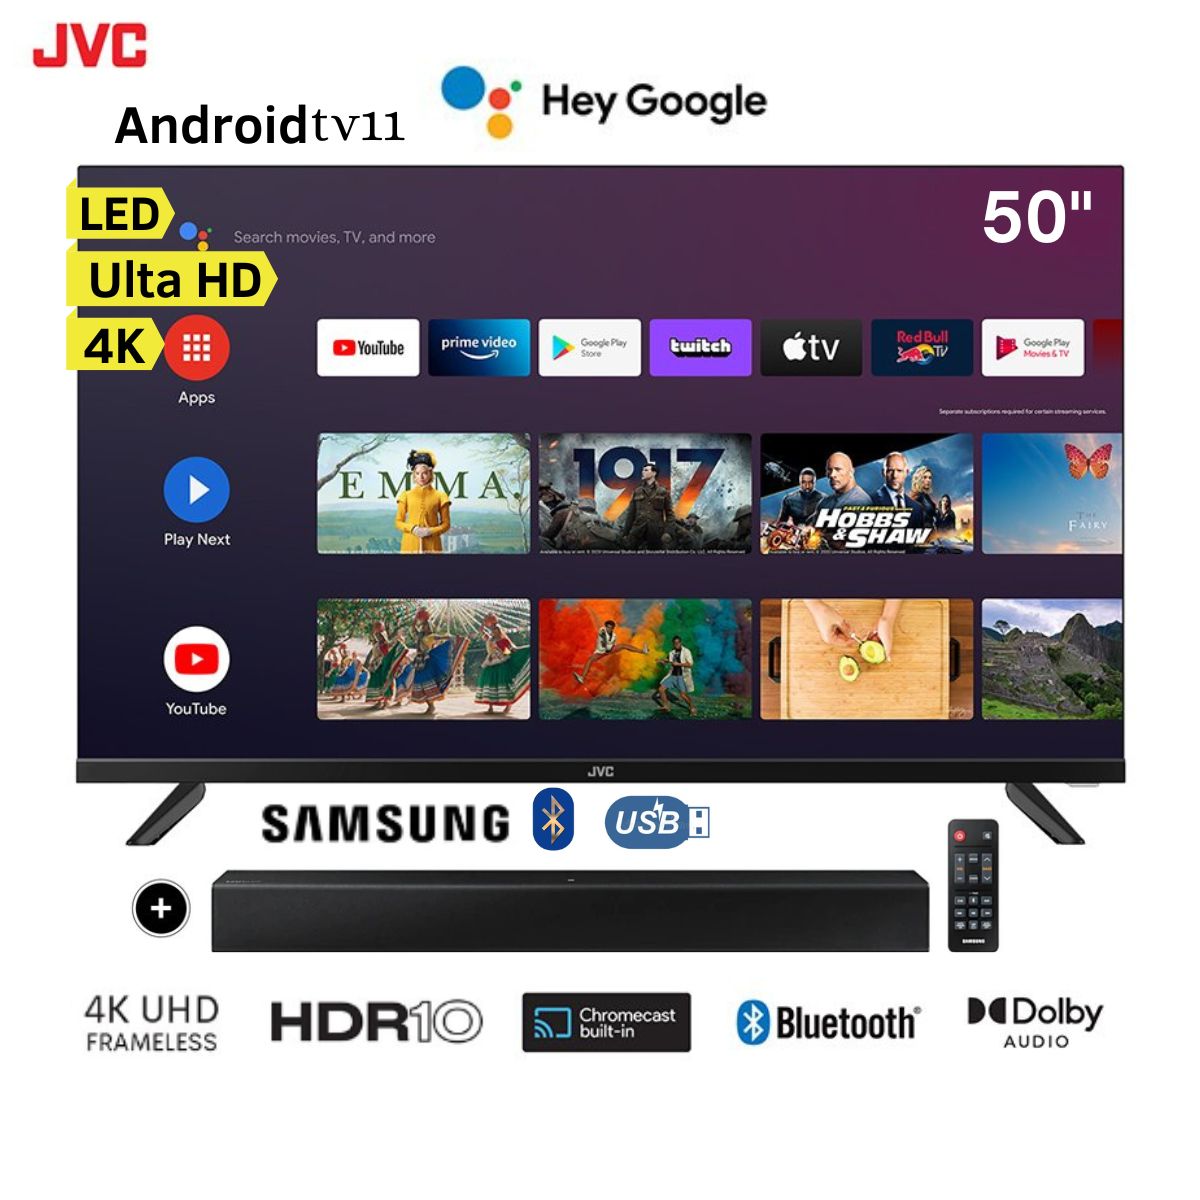 Televisor JVC LED Smart TV 50" Ultra HD 4K Frameless AndroidTv11 LT-50KB527 + Soundbar